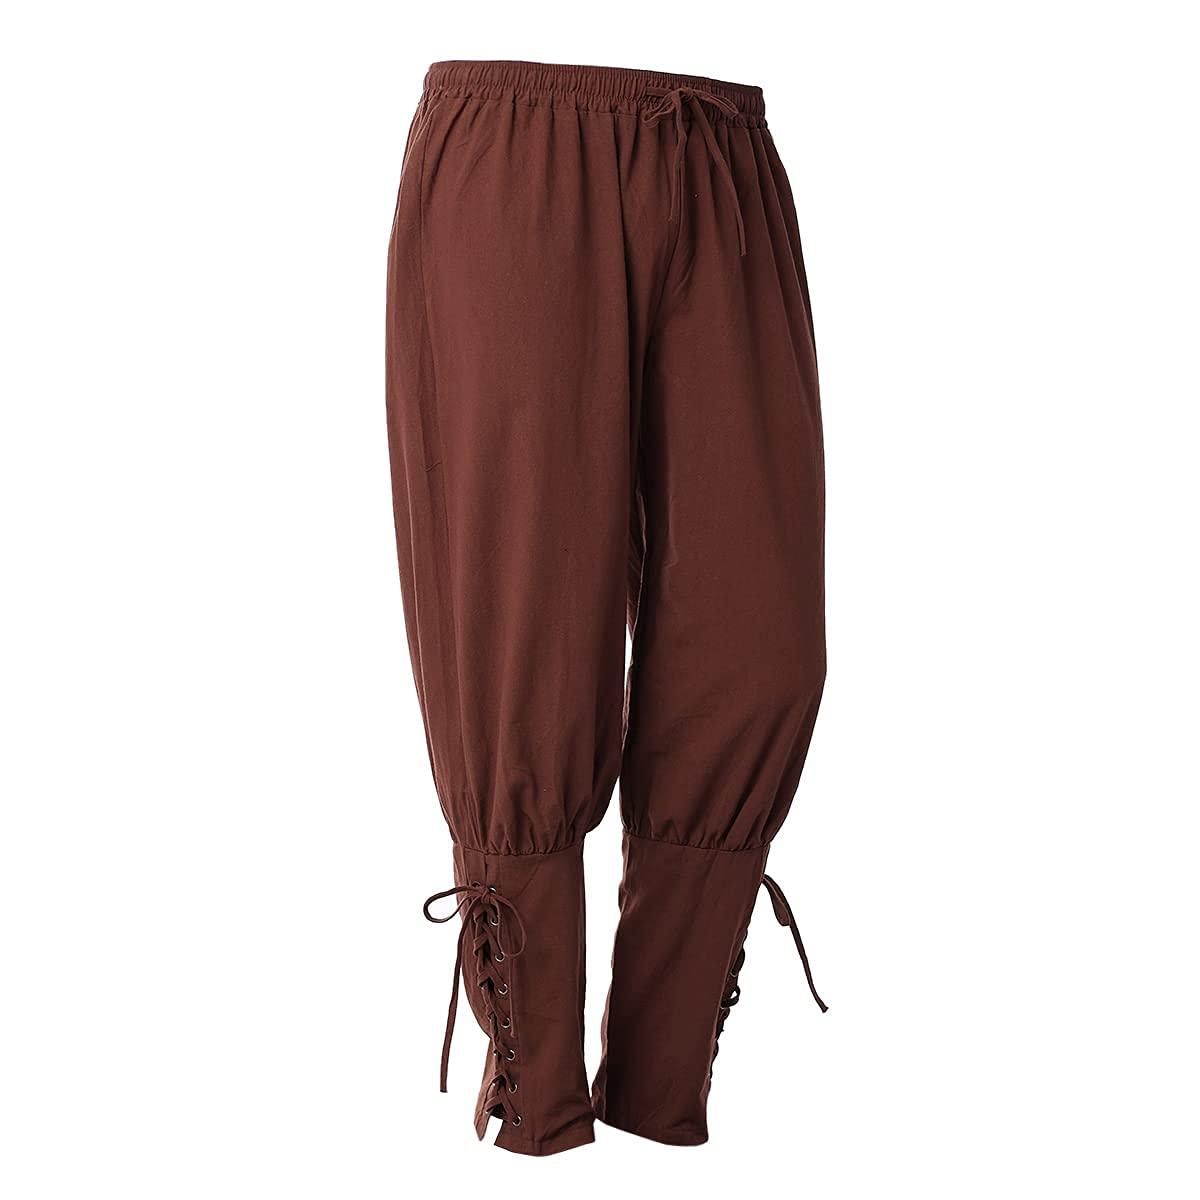 COSDREAMER Men's Medieval Pants Viking Pirate Costume Trousers Brown 3